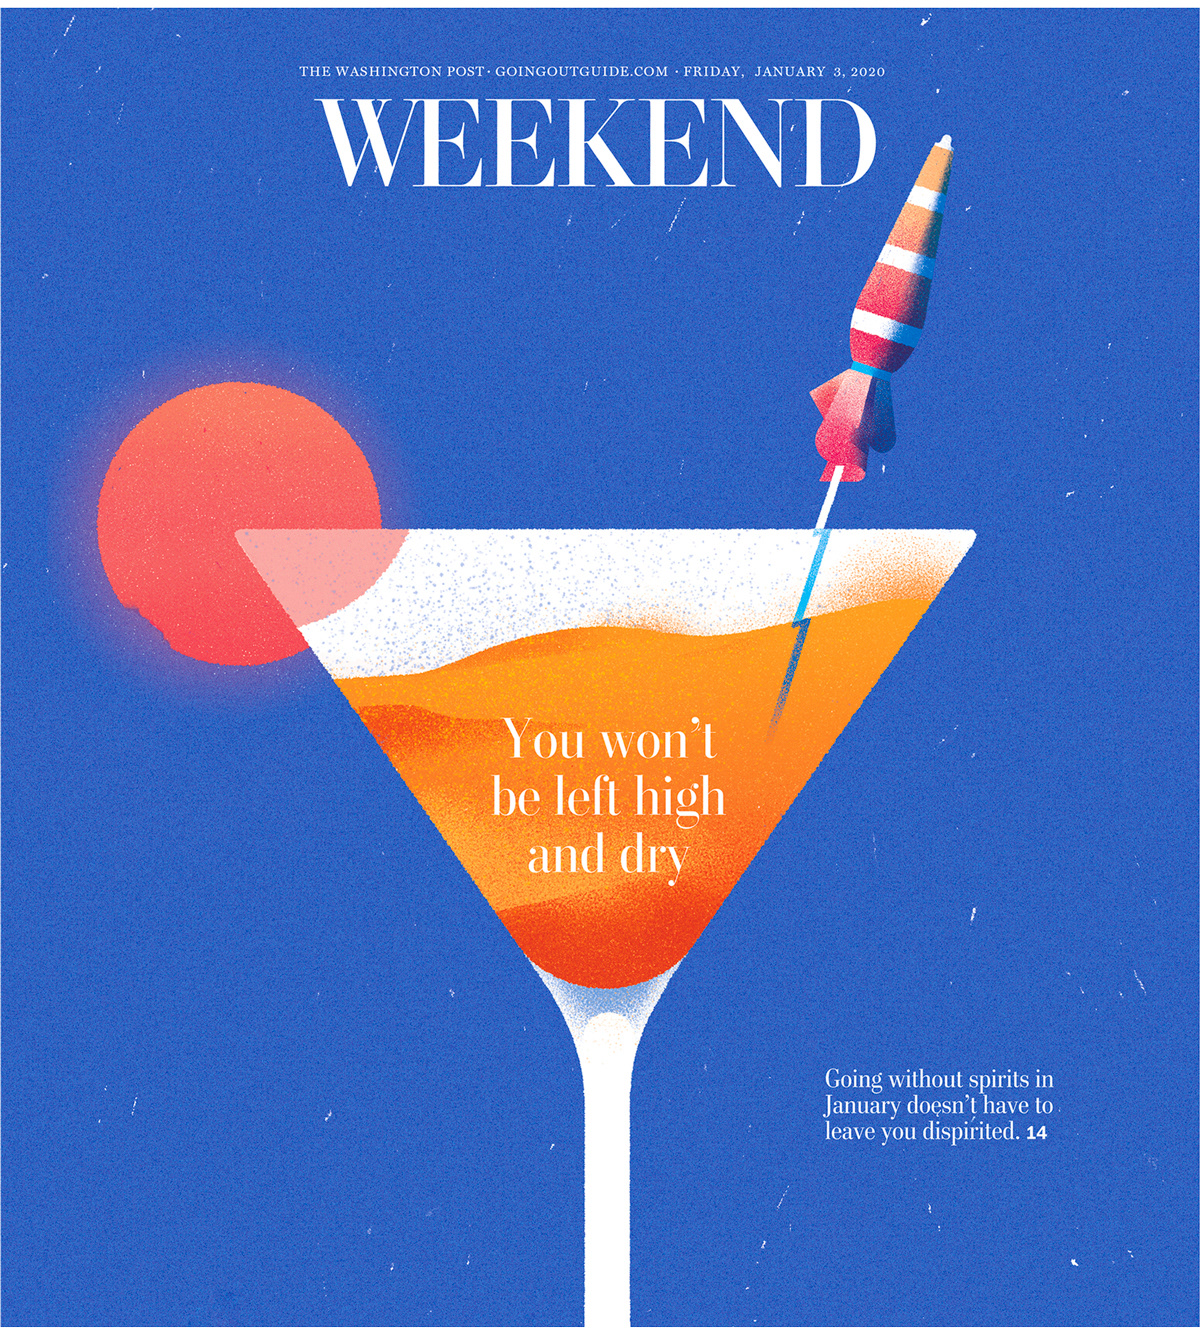 alcohol conceptual illustration cover illustration drinks Dry january Editorial Illustration magazine Washington Post weekend